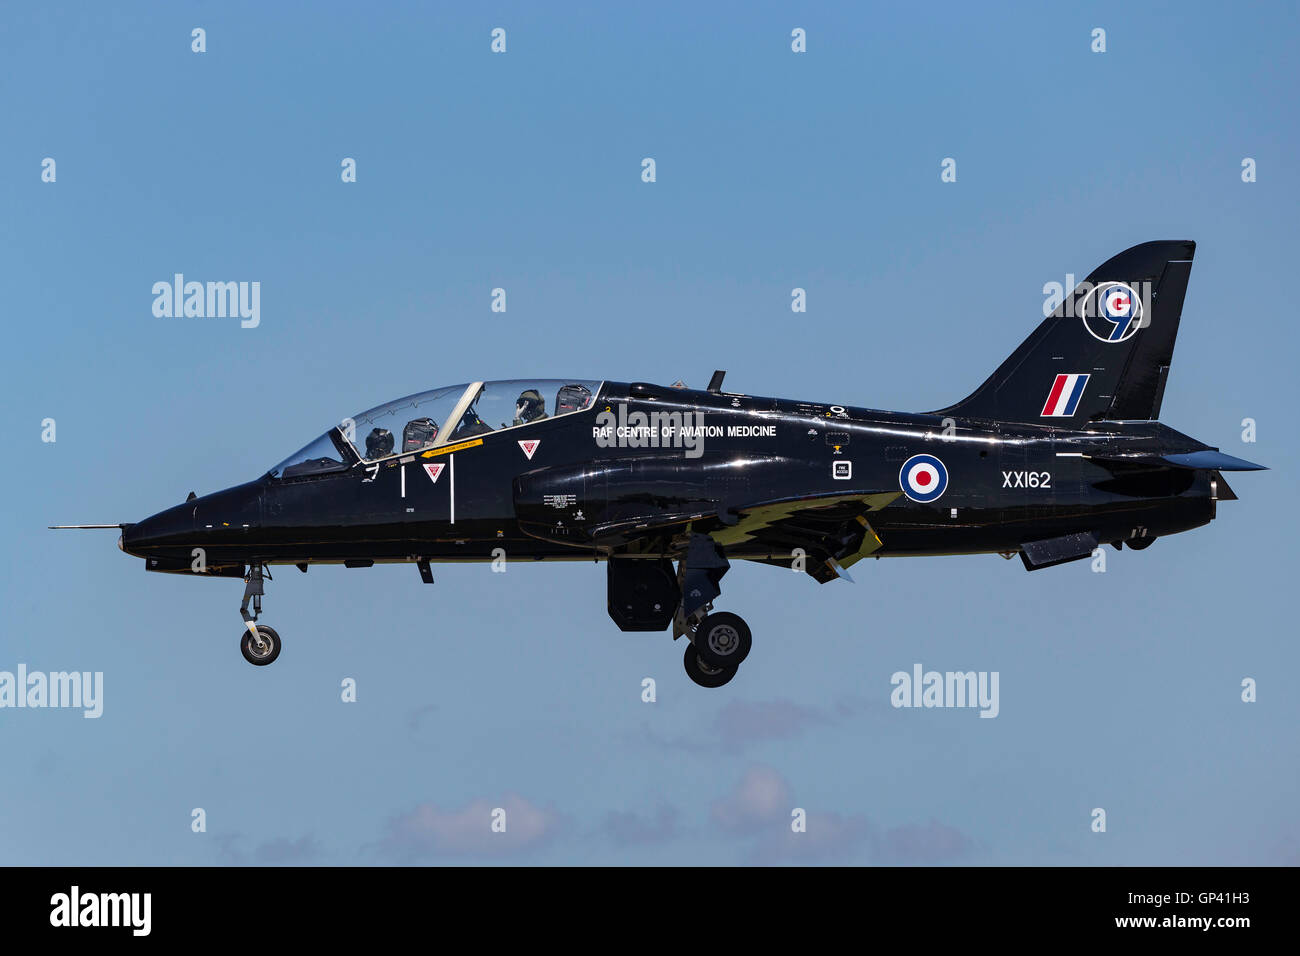 Royal Air Force (RAF) HAWKER SIDDELEY Hawk T1 XX162 della RAF Centro di medicina aeronautica. Foto Stock